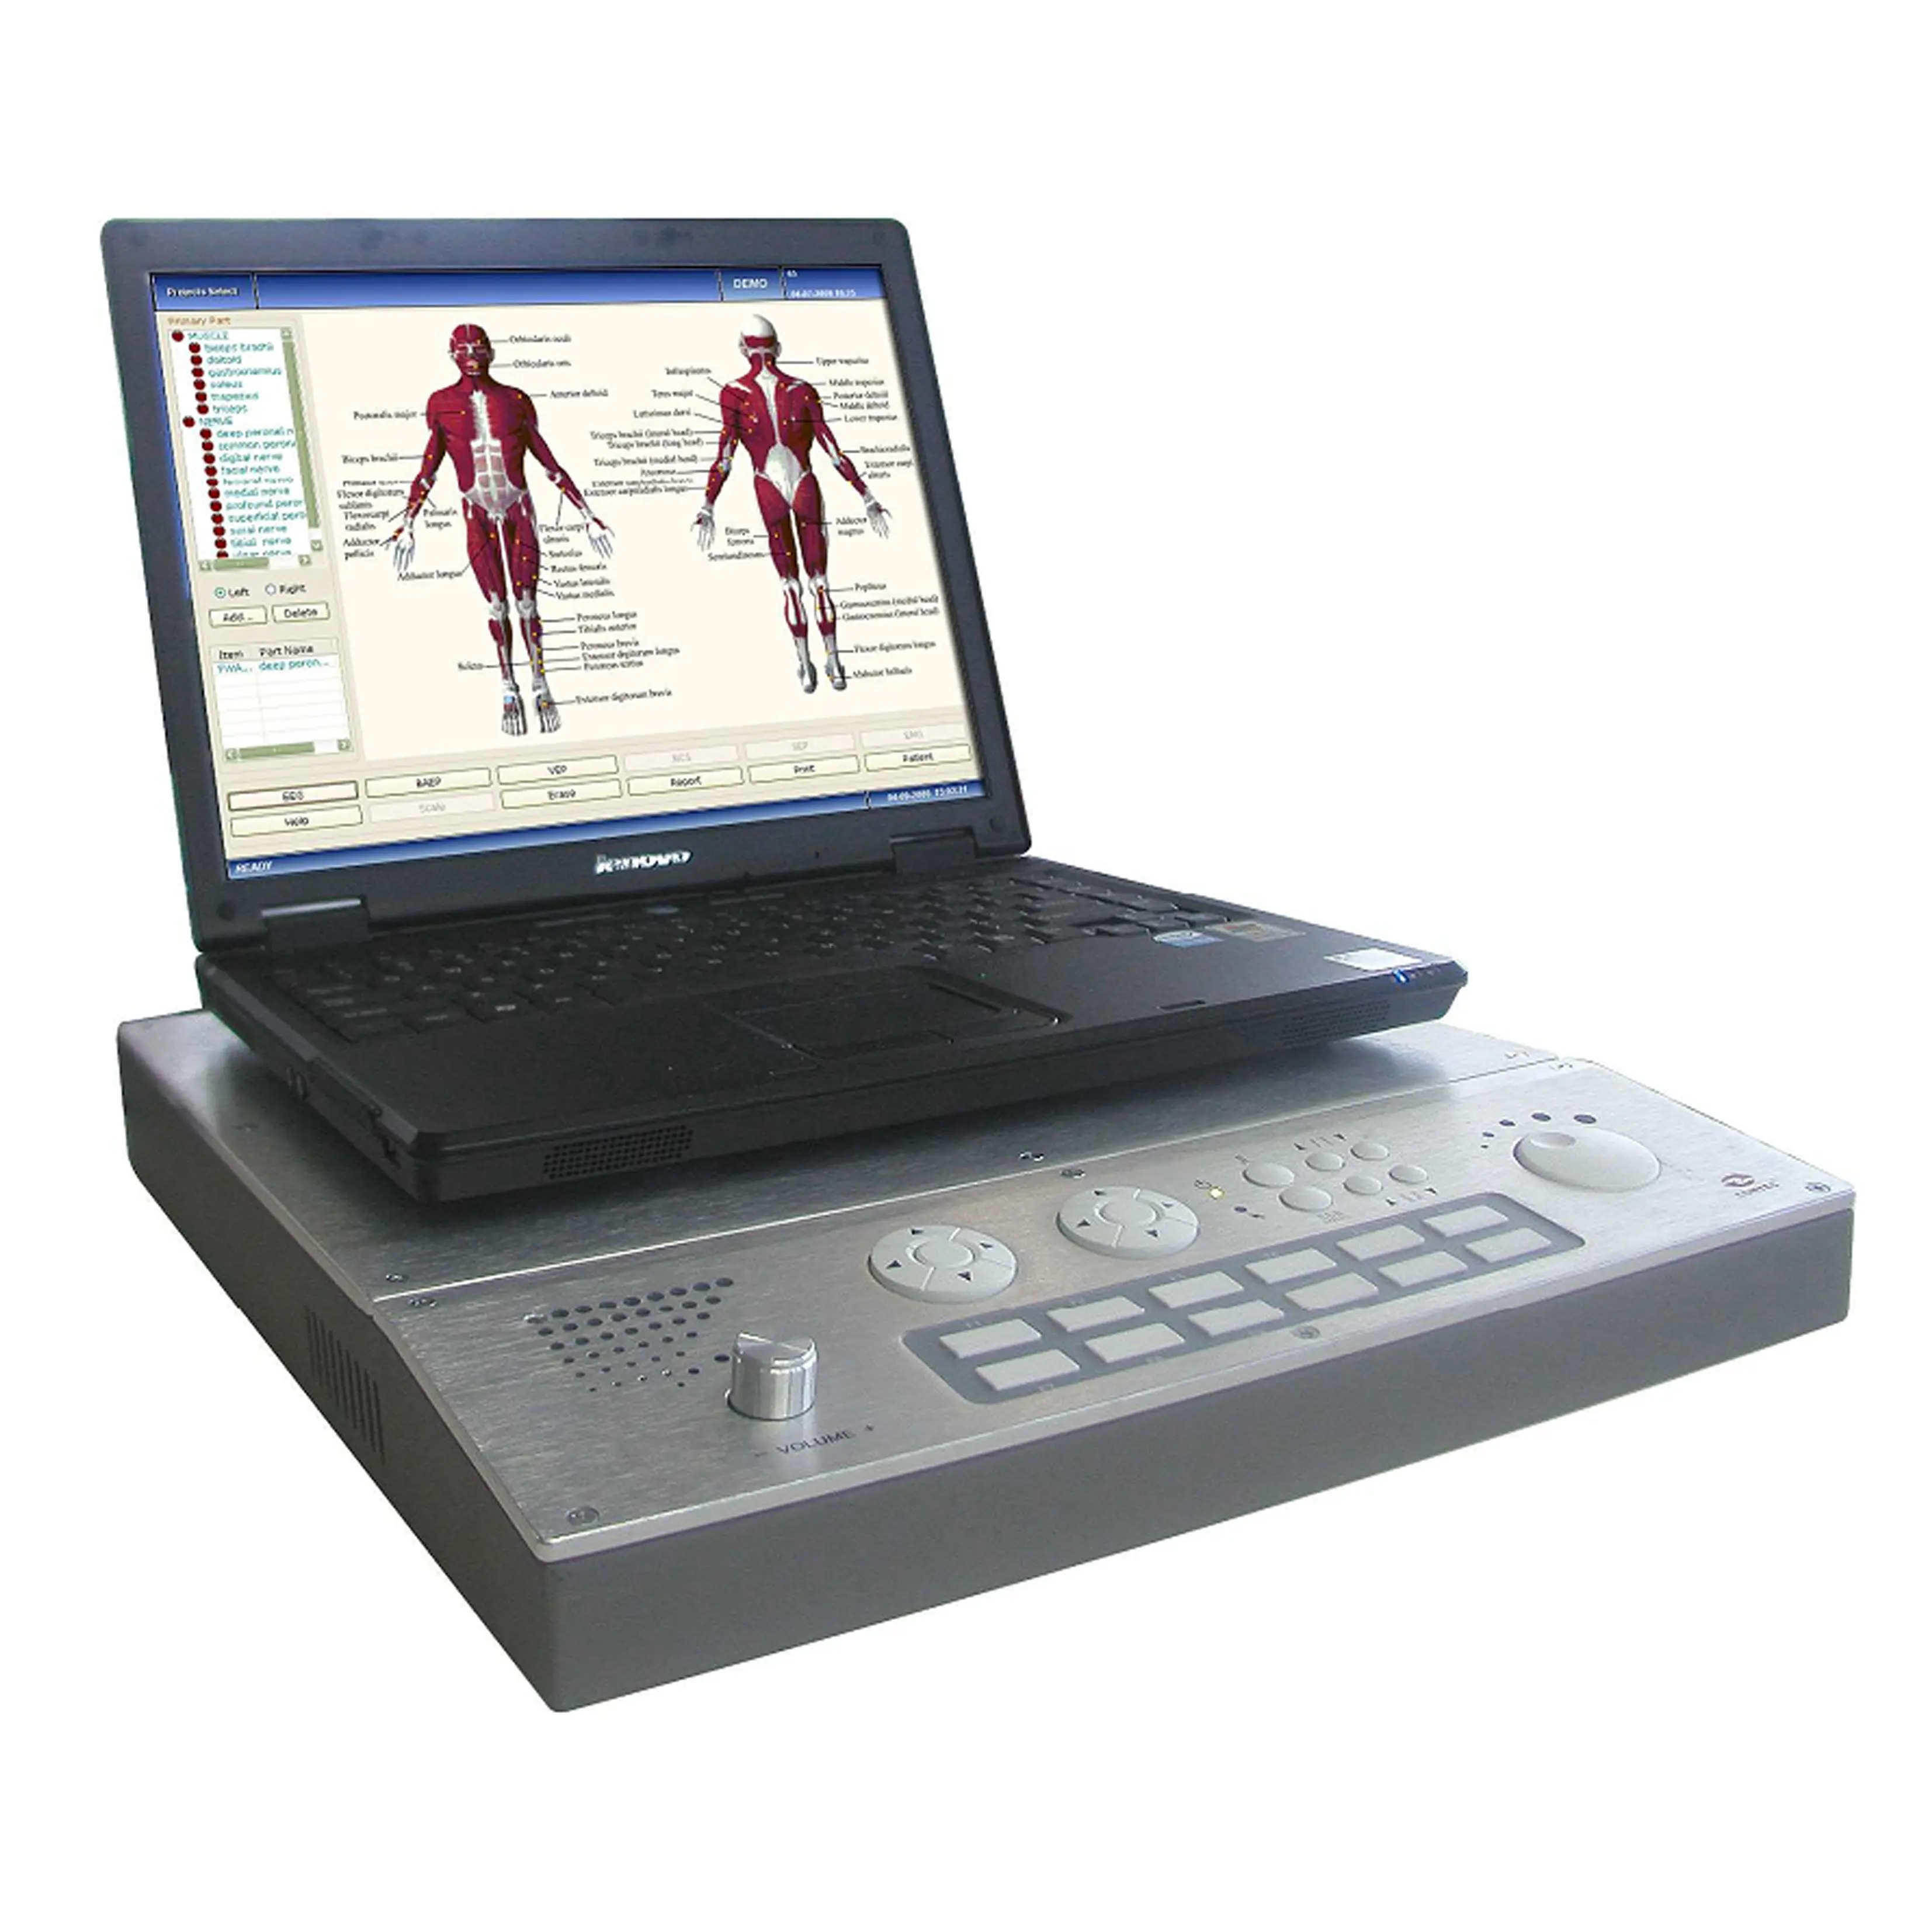 IN-H009 portable surface ncv emg machine ,electromyography emg equipment price,emg pickup